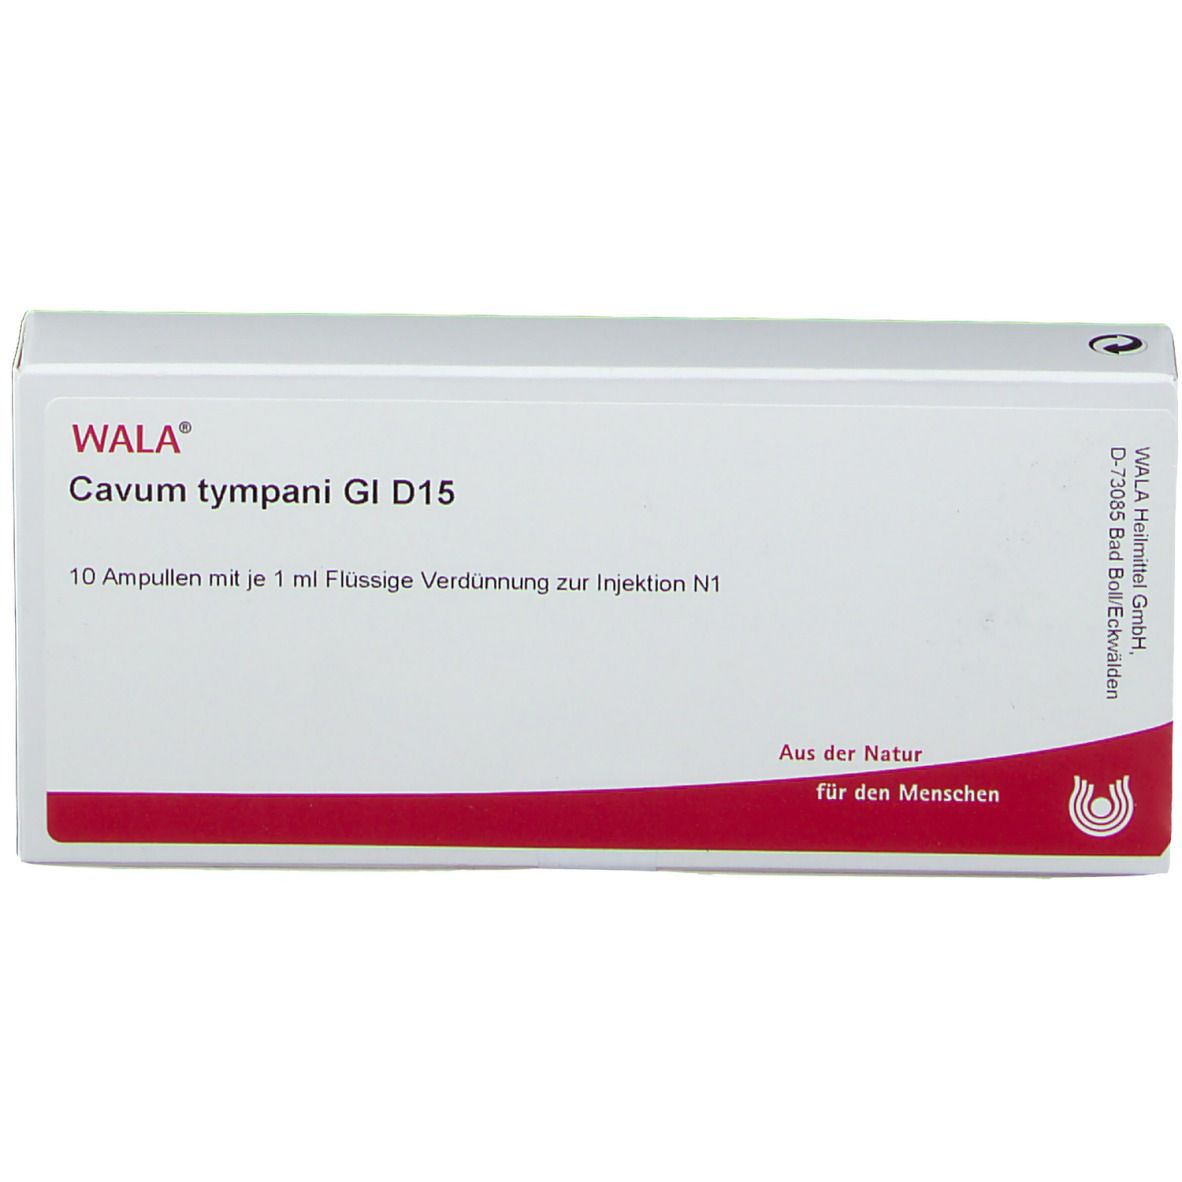 WALA® Cavum tympani Gl D 15